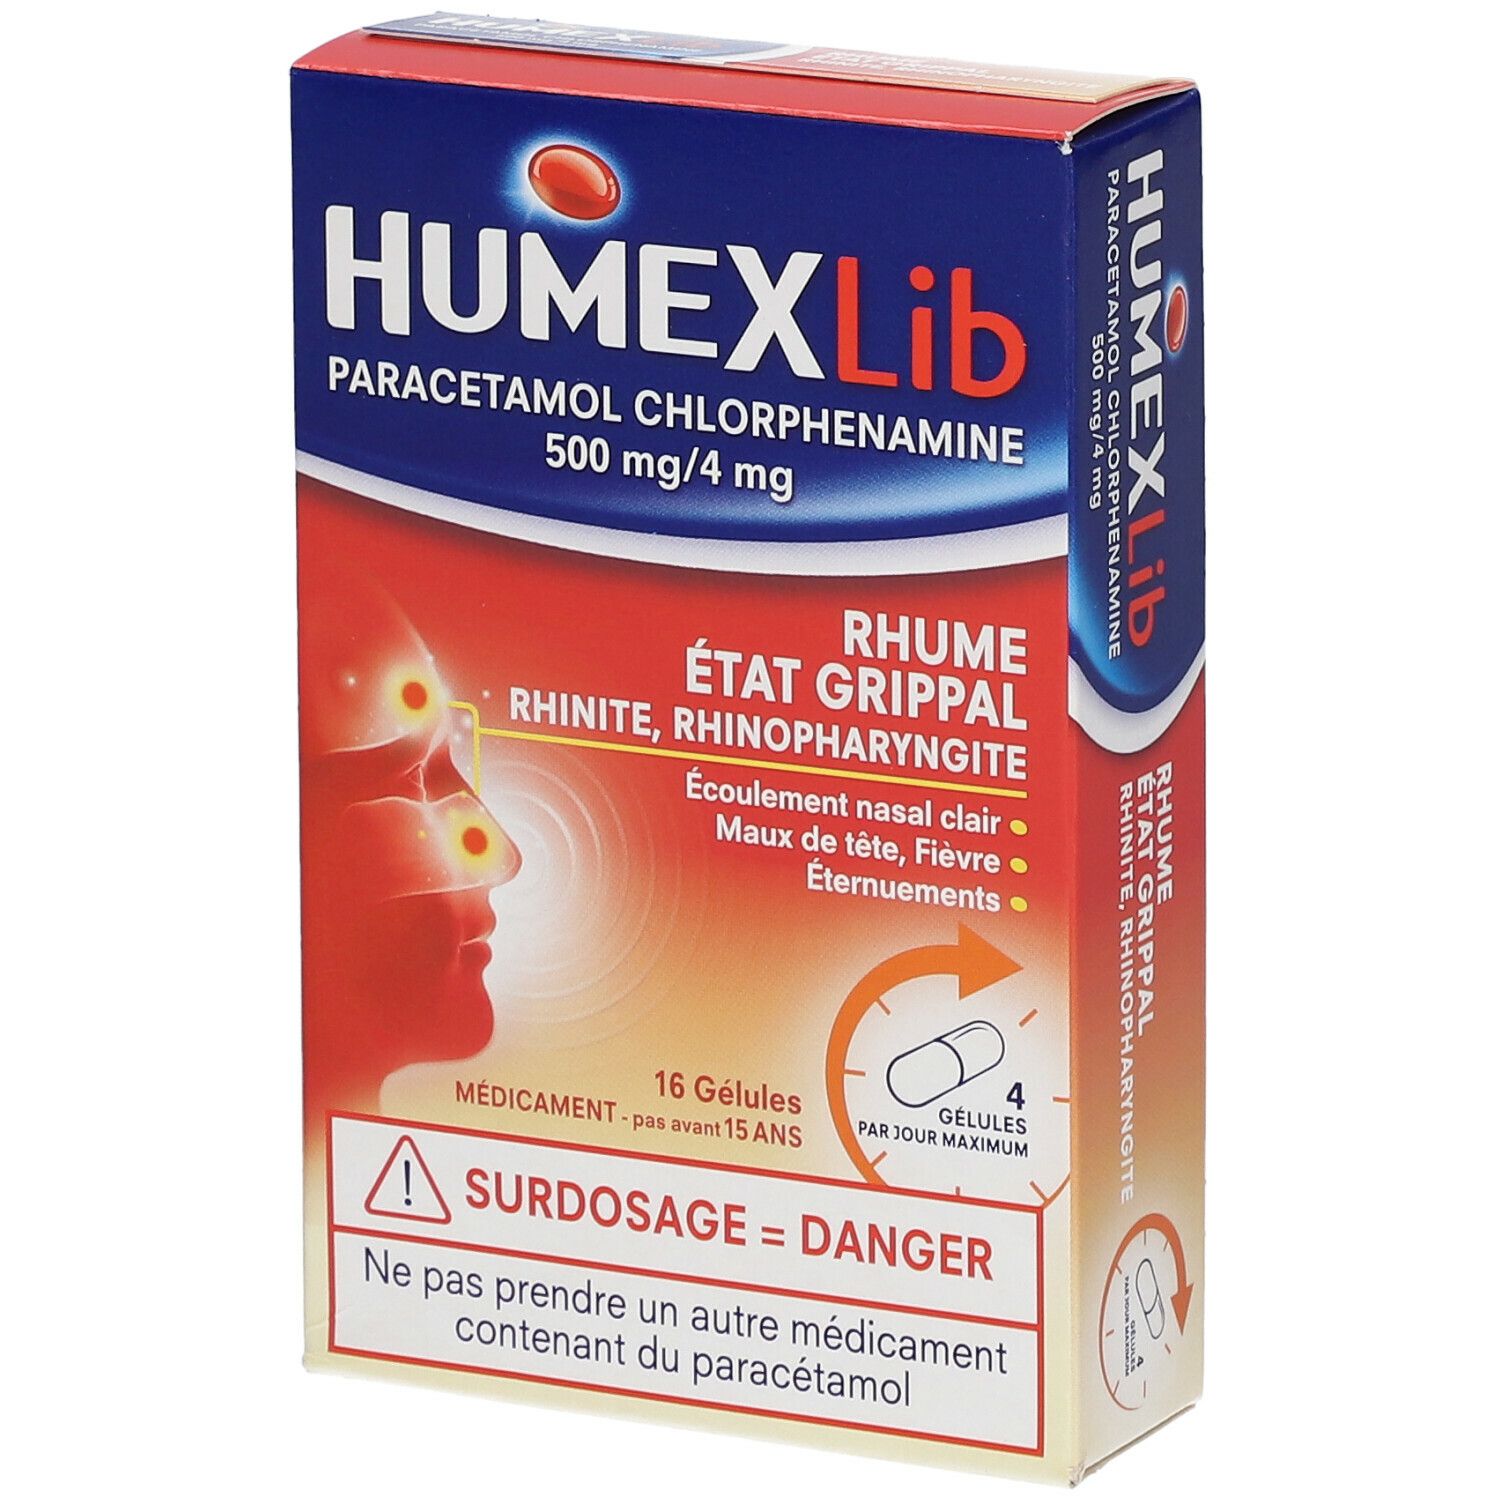 Humexlib 500 mg/4 mg